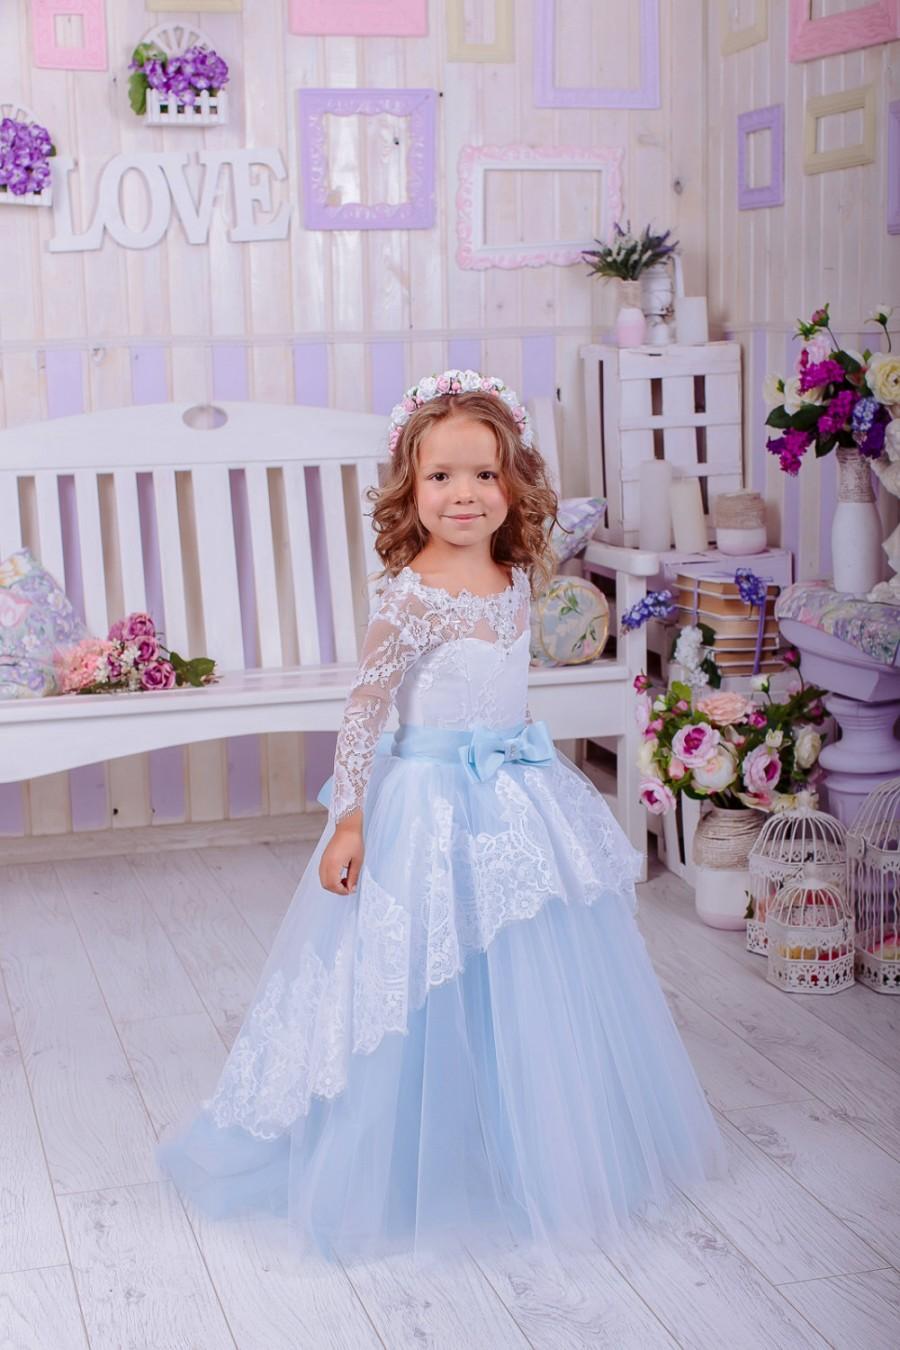 Wedding - Baby Blue Lace Flower Girl Dress,Flower Girl Dress,Wedding Party Dress,Baby Dress, Rustic Girl Dress, Girls Dresses,Ivory Flower Girl Dress